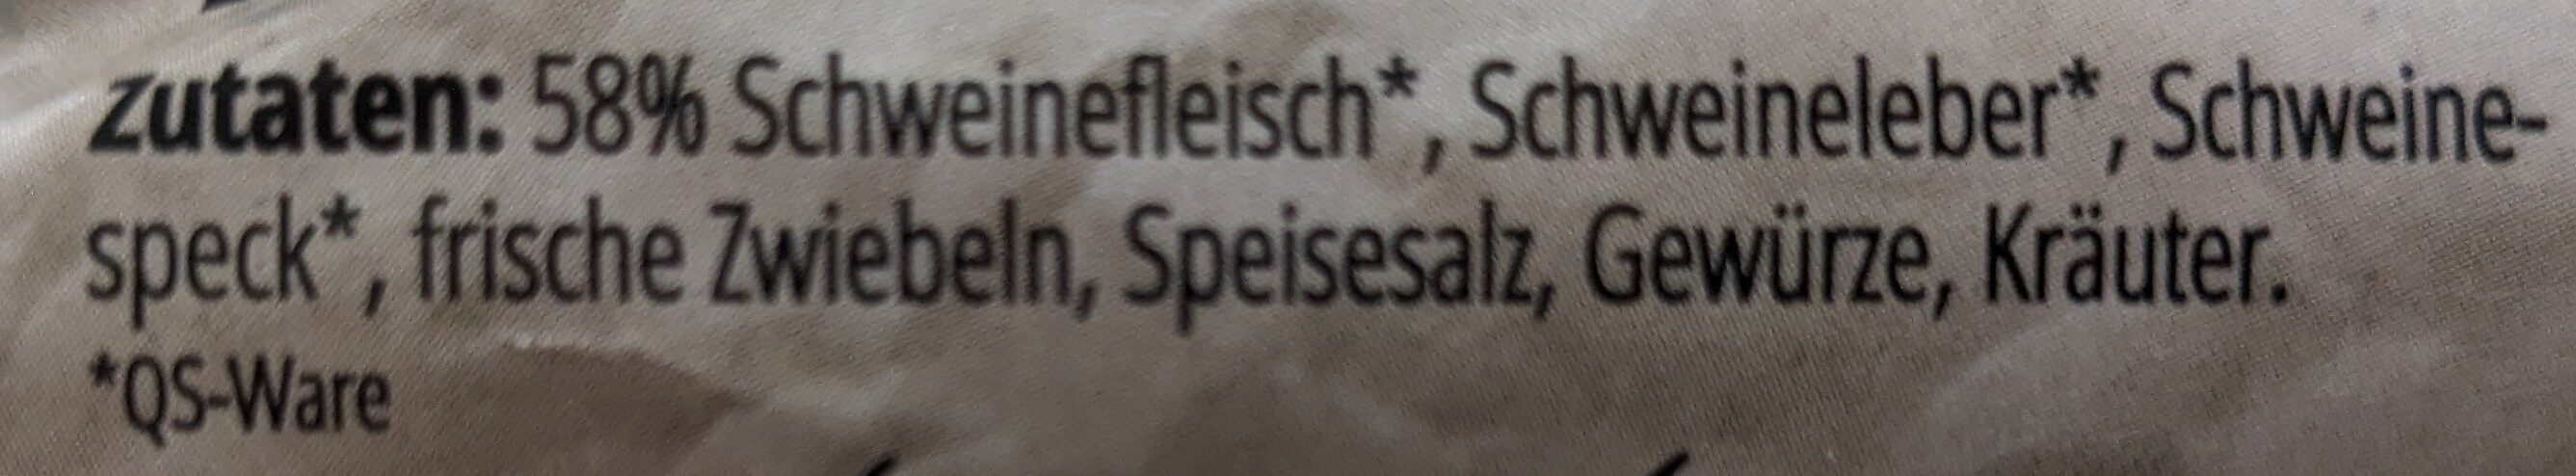 Original Pfälzer Leberwurst - Zutaten